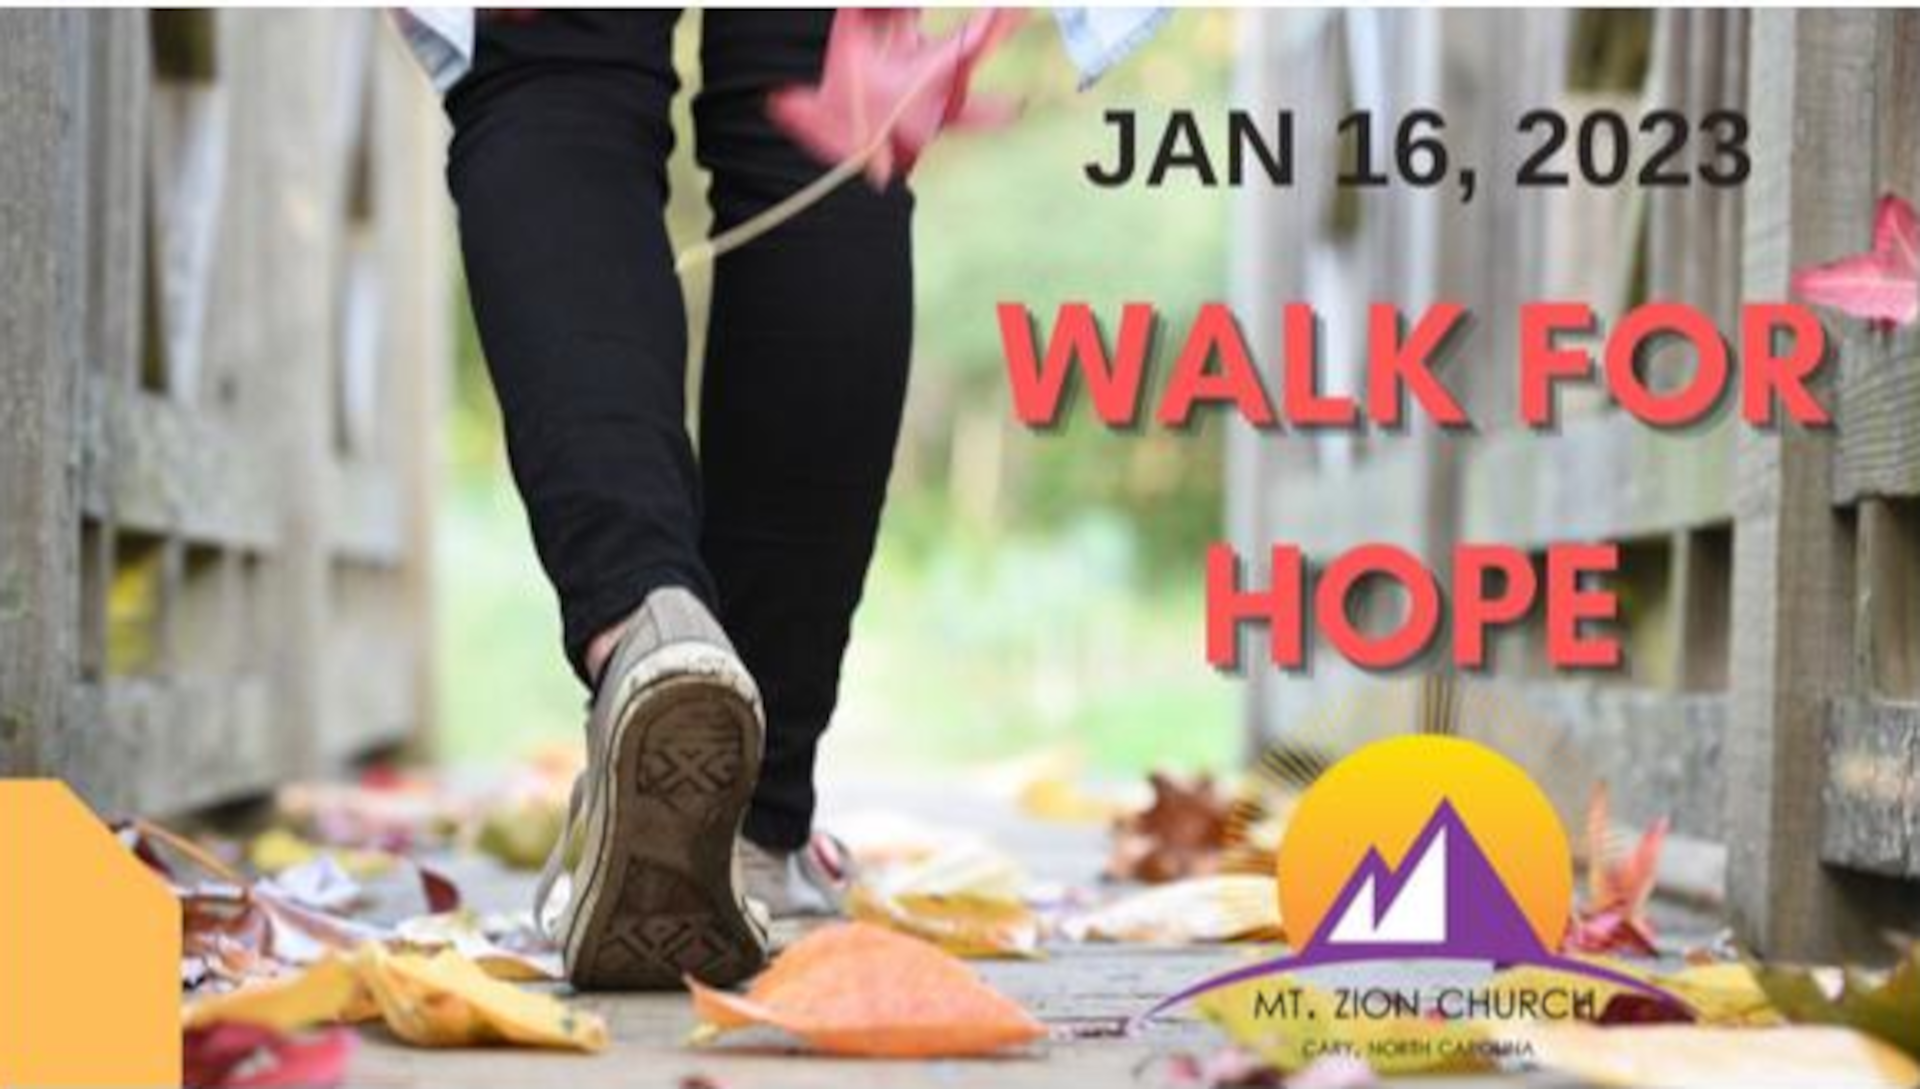 Walk for Hope: January 16, 2023